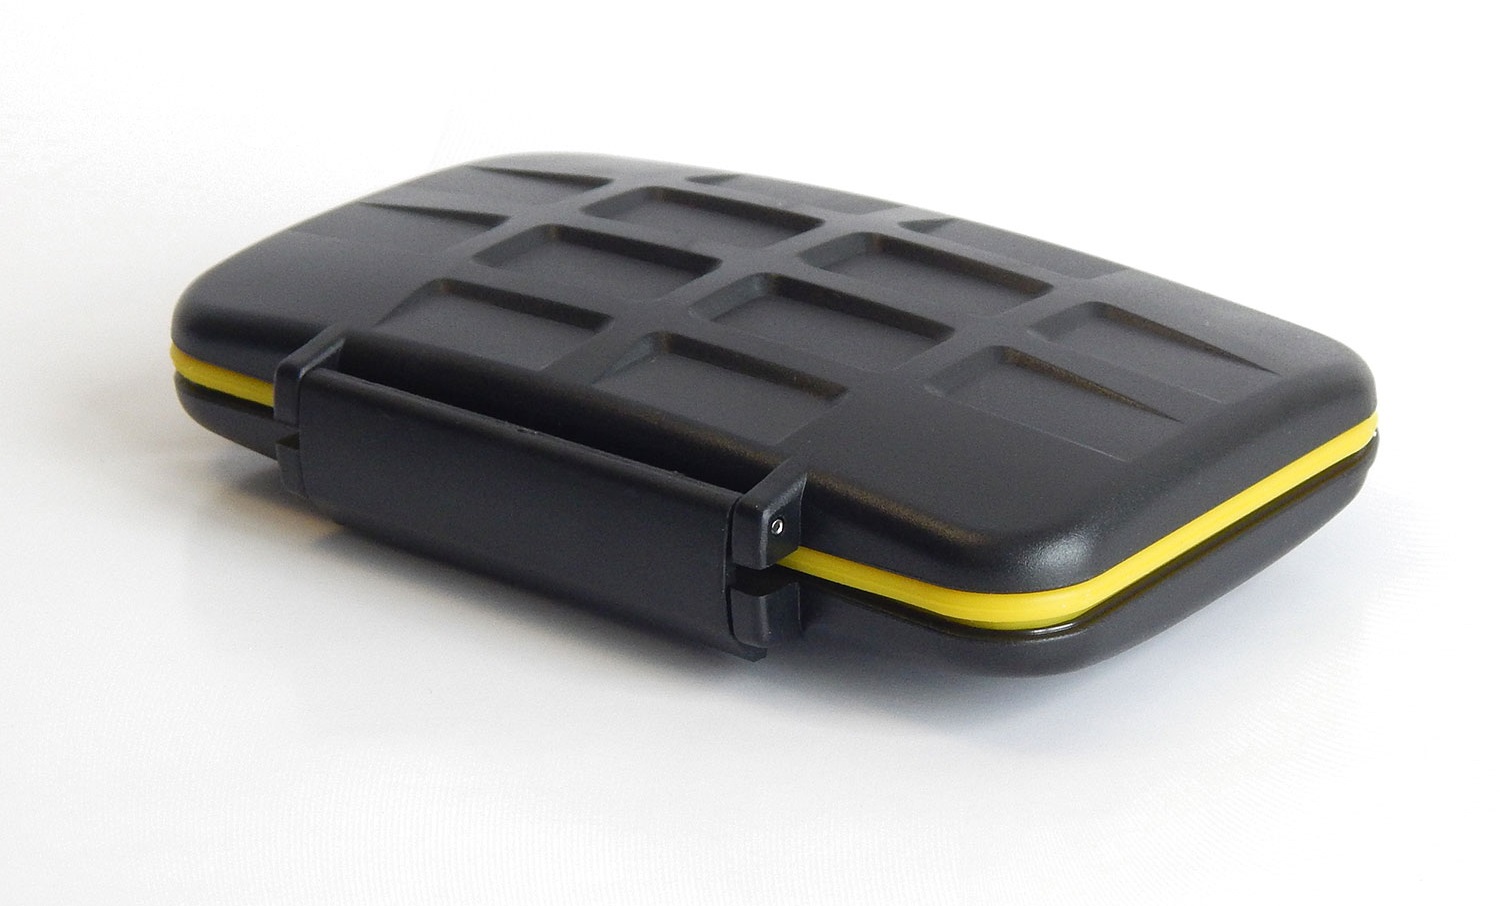 JJC MC-SDMSD24 Water-Resistant Holder Storage Memory Card Case & 12 Micro SD Cards (Black)